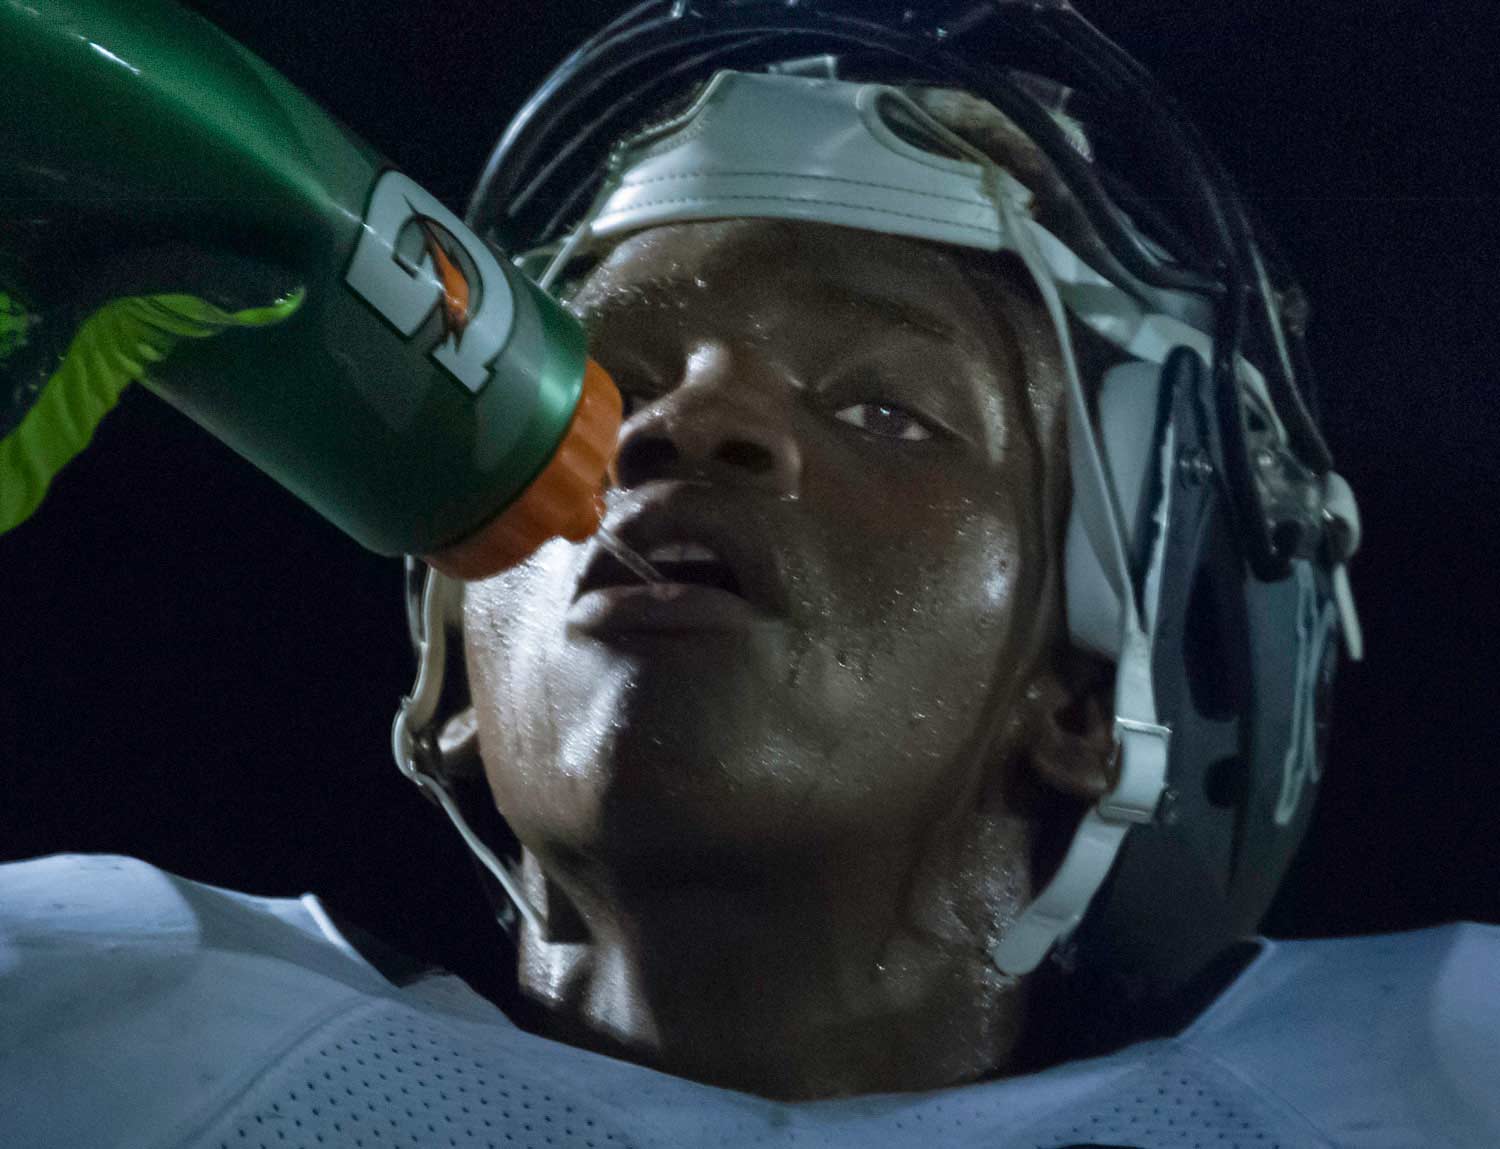 high school football player taking a drink